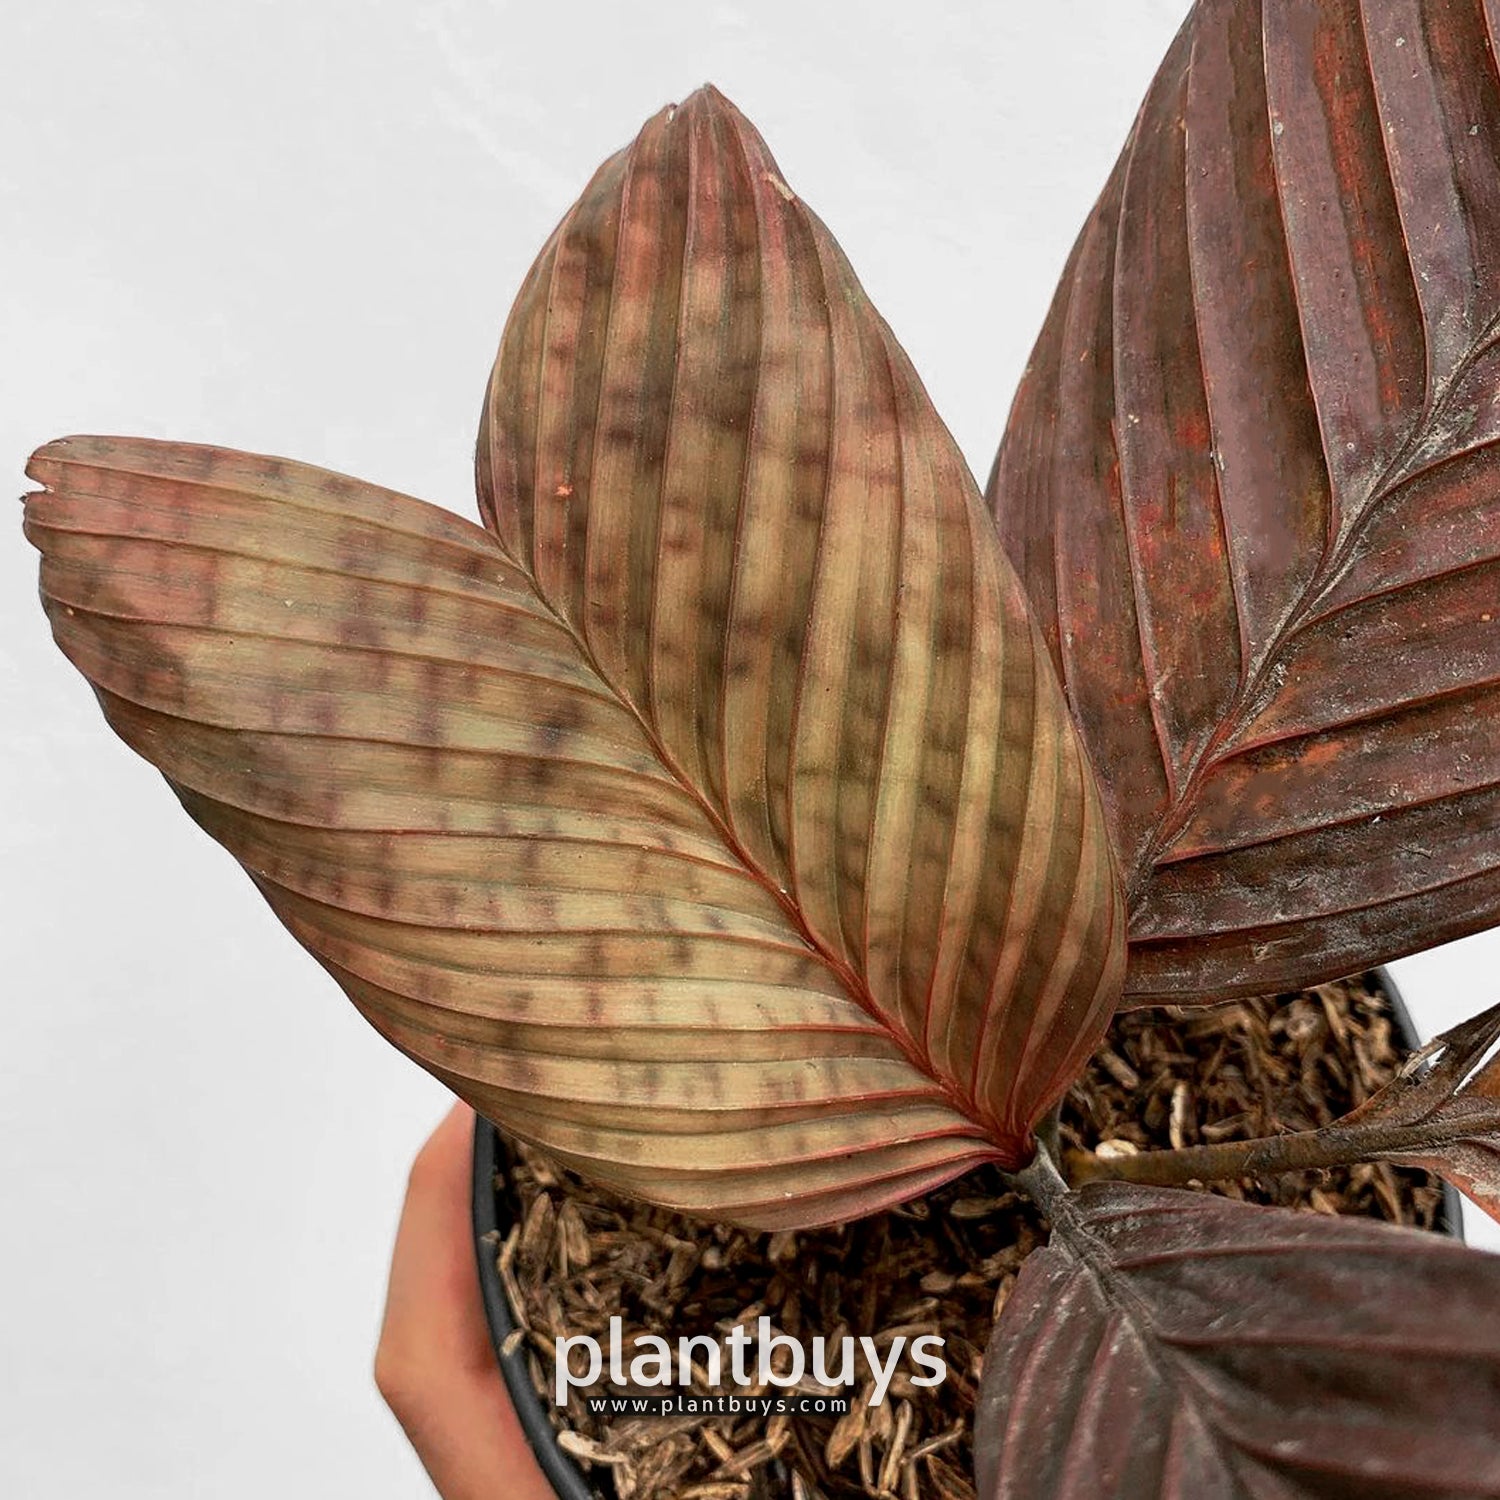 Palm Pinanga Veitchii / Palm Red Borneo